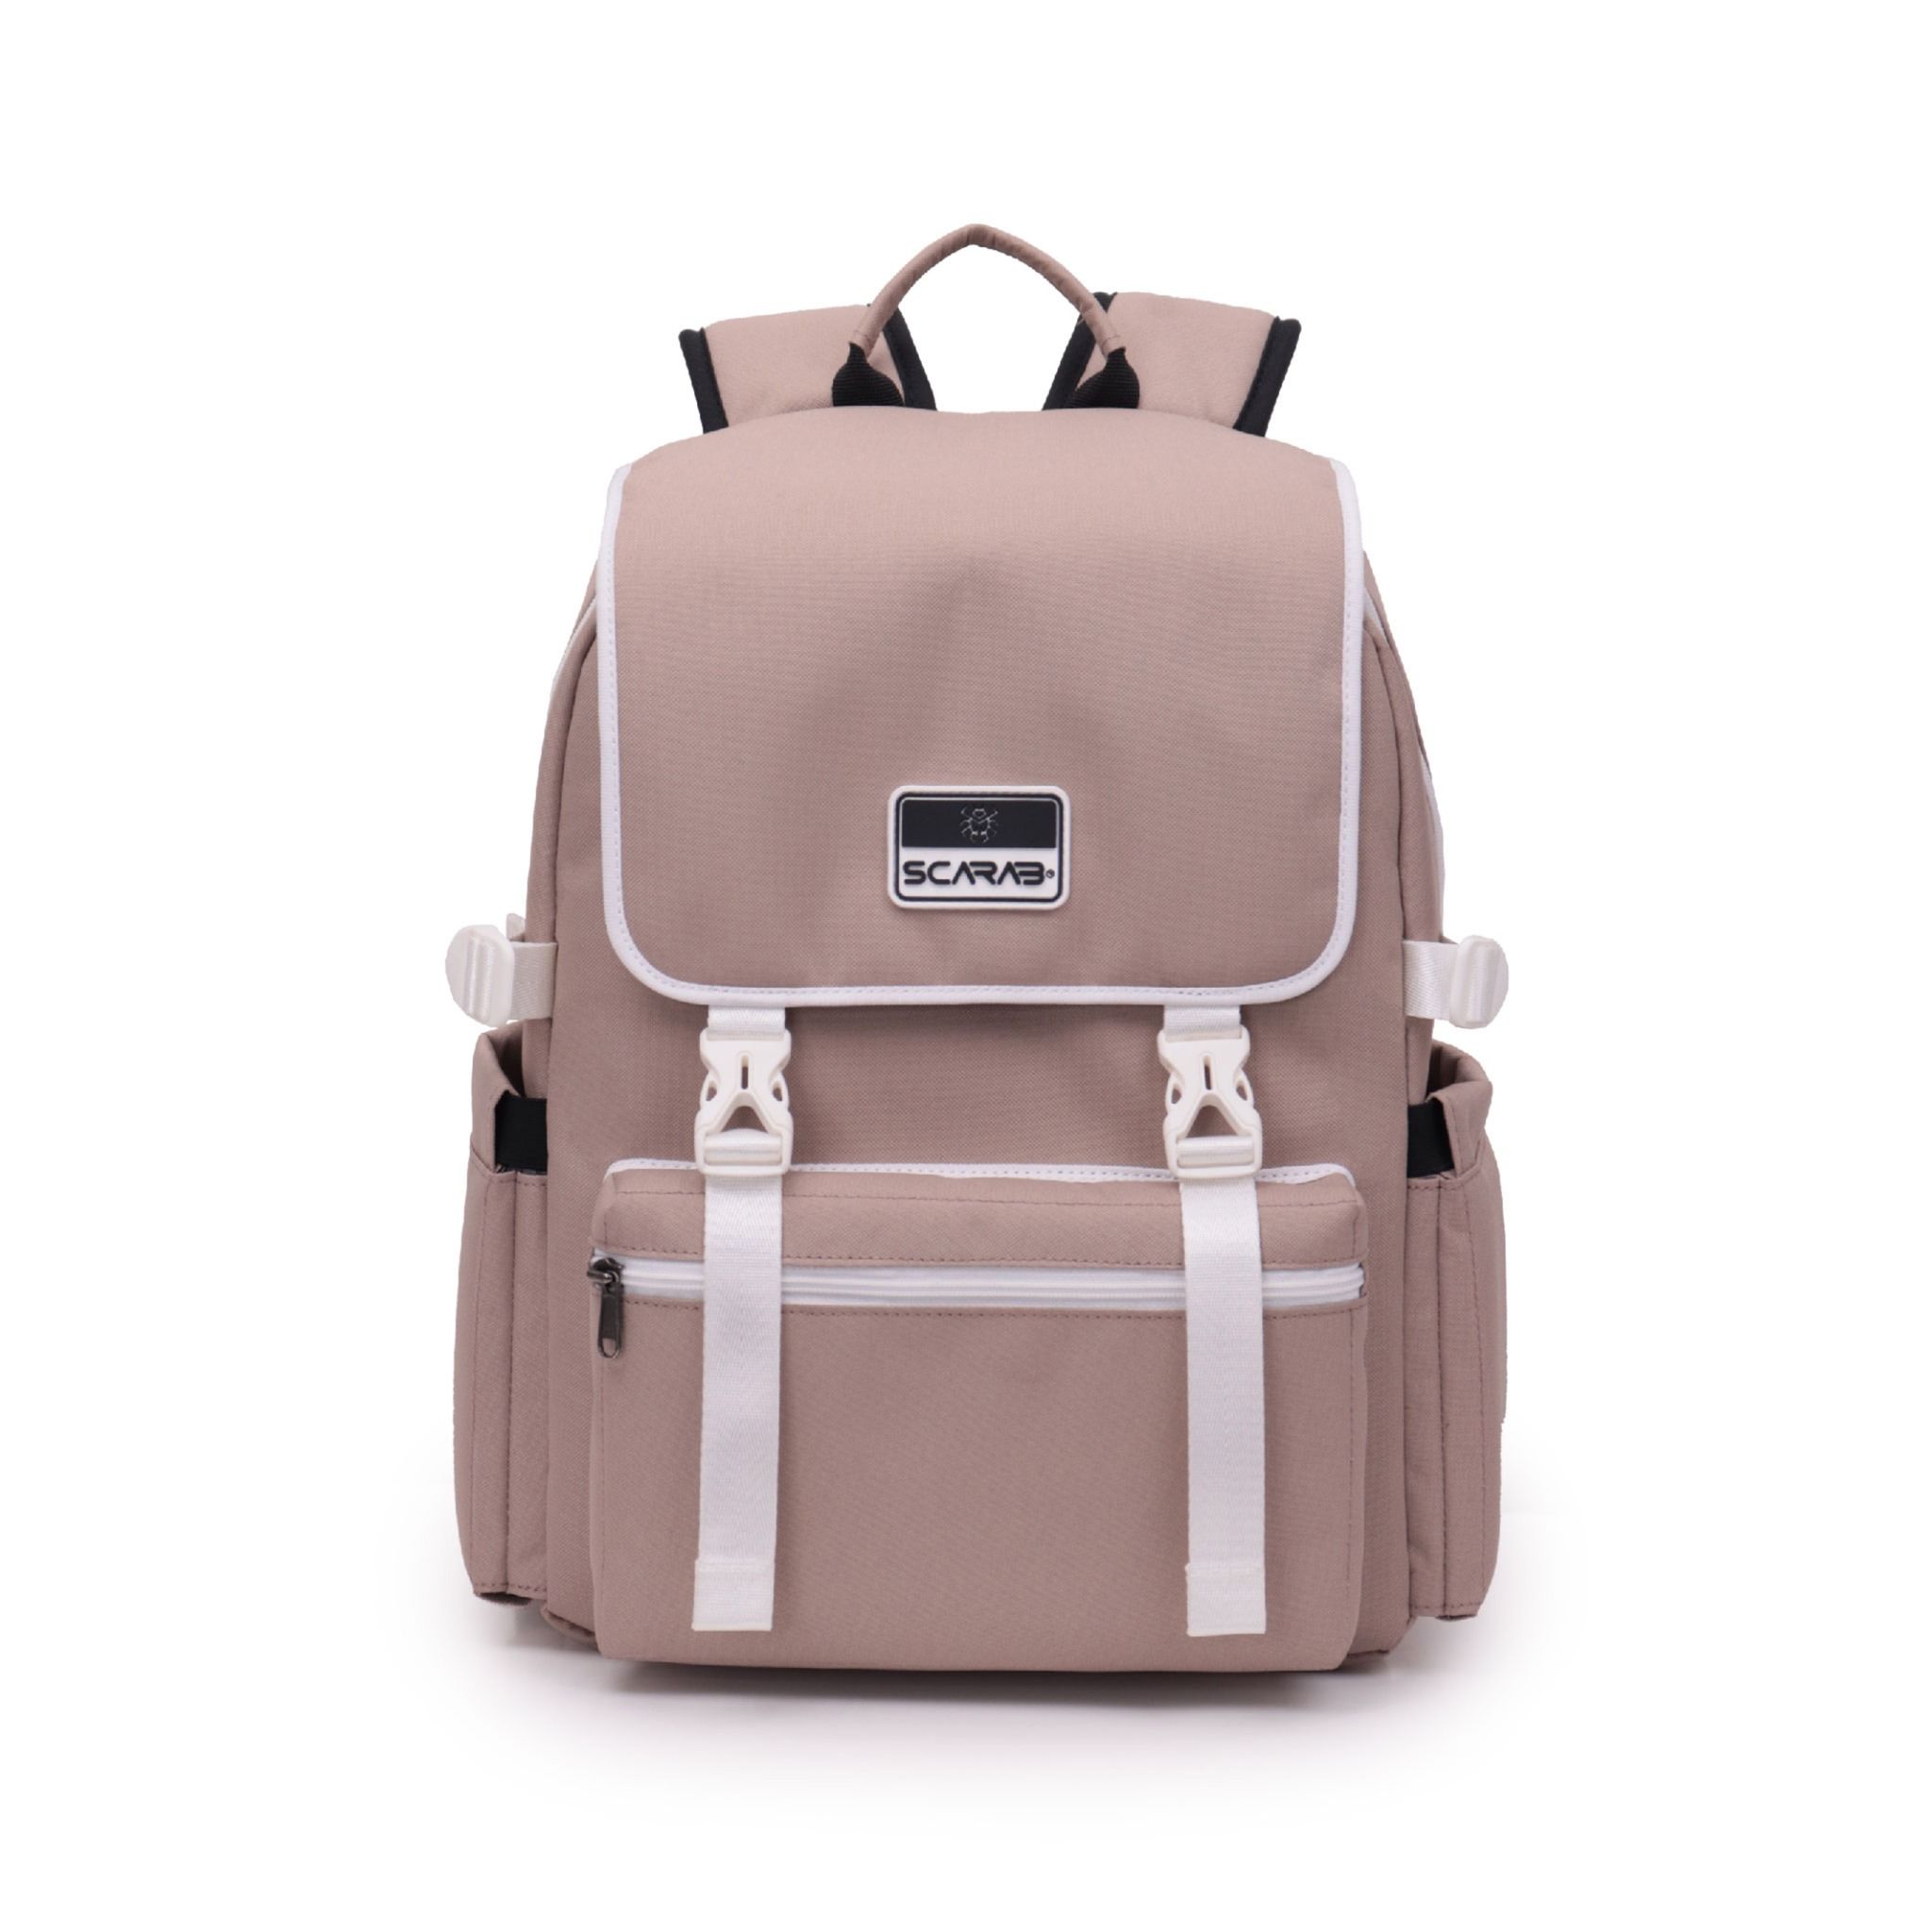  Classmate Backpack - Latte 